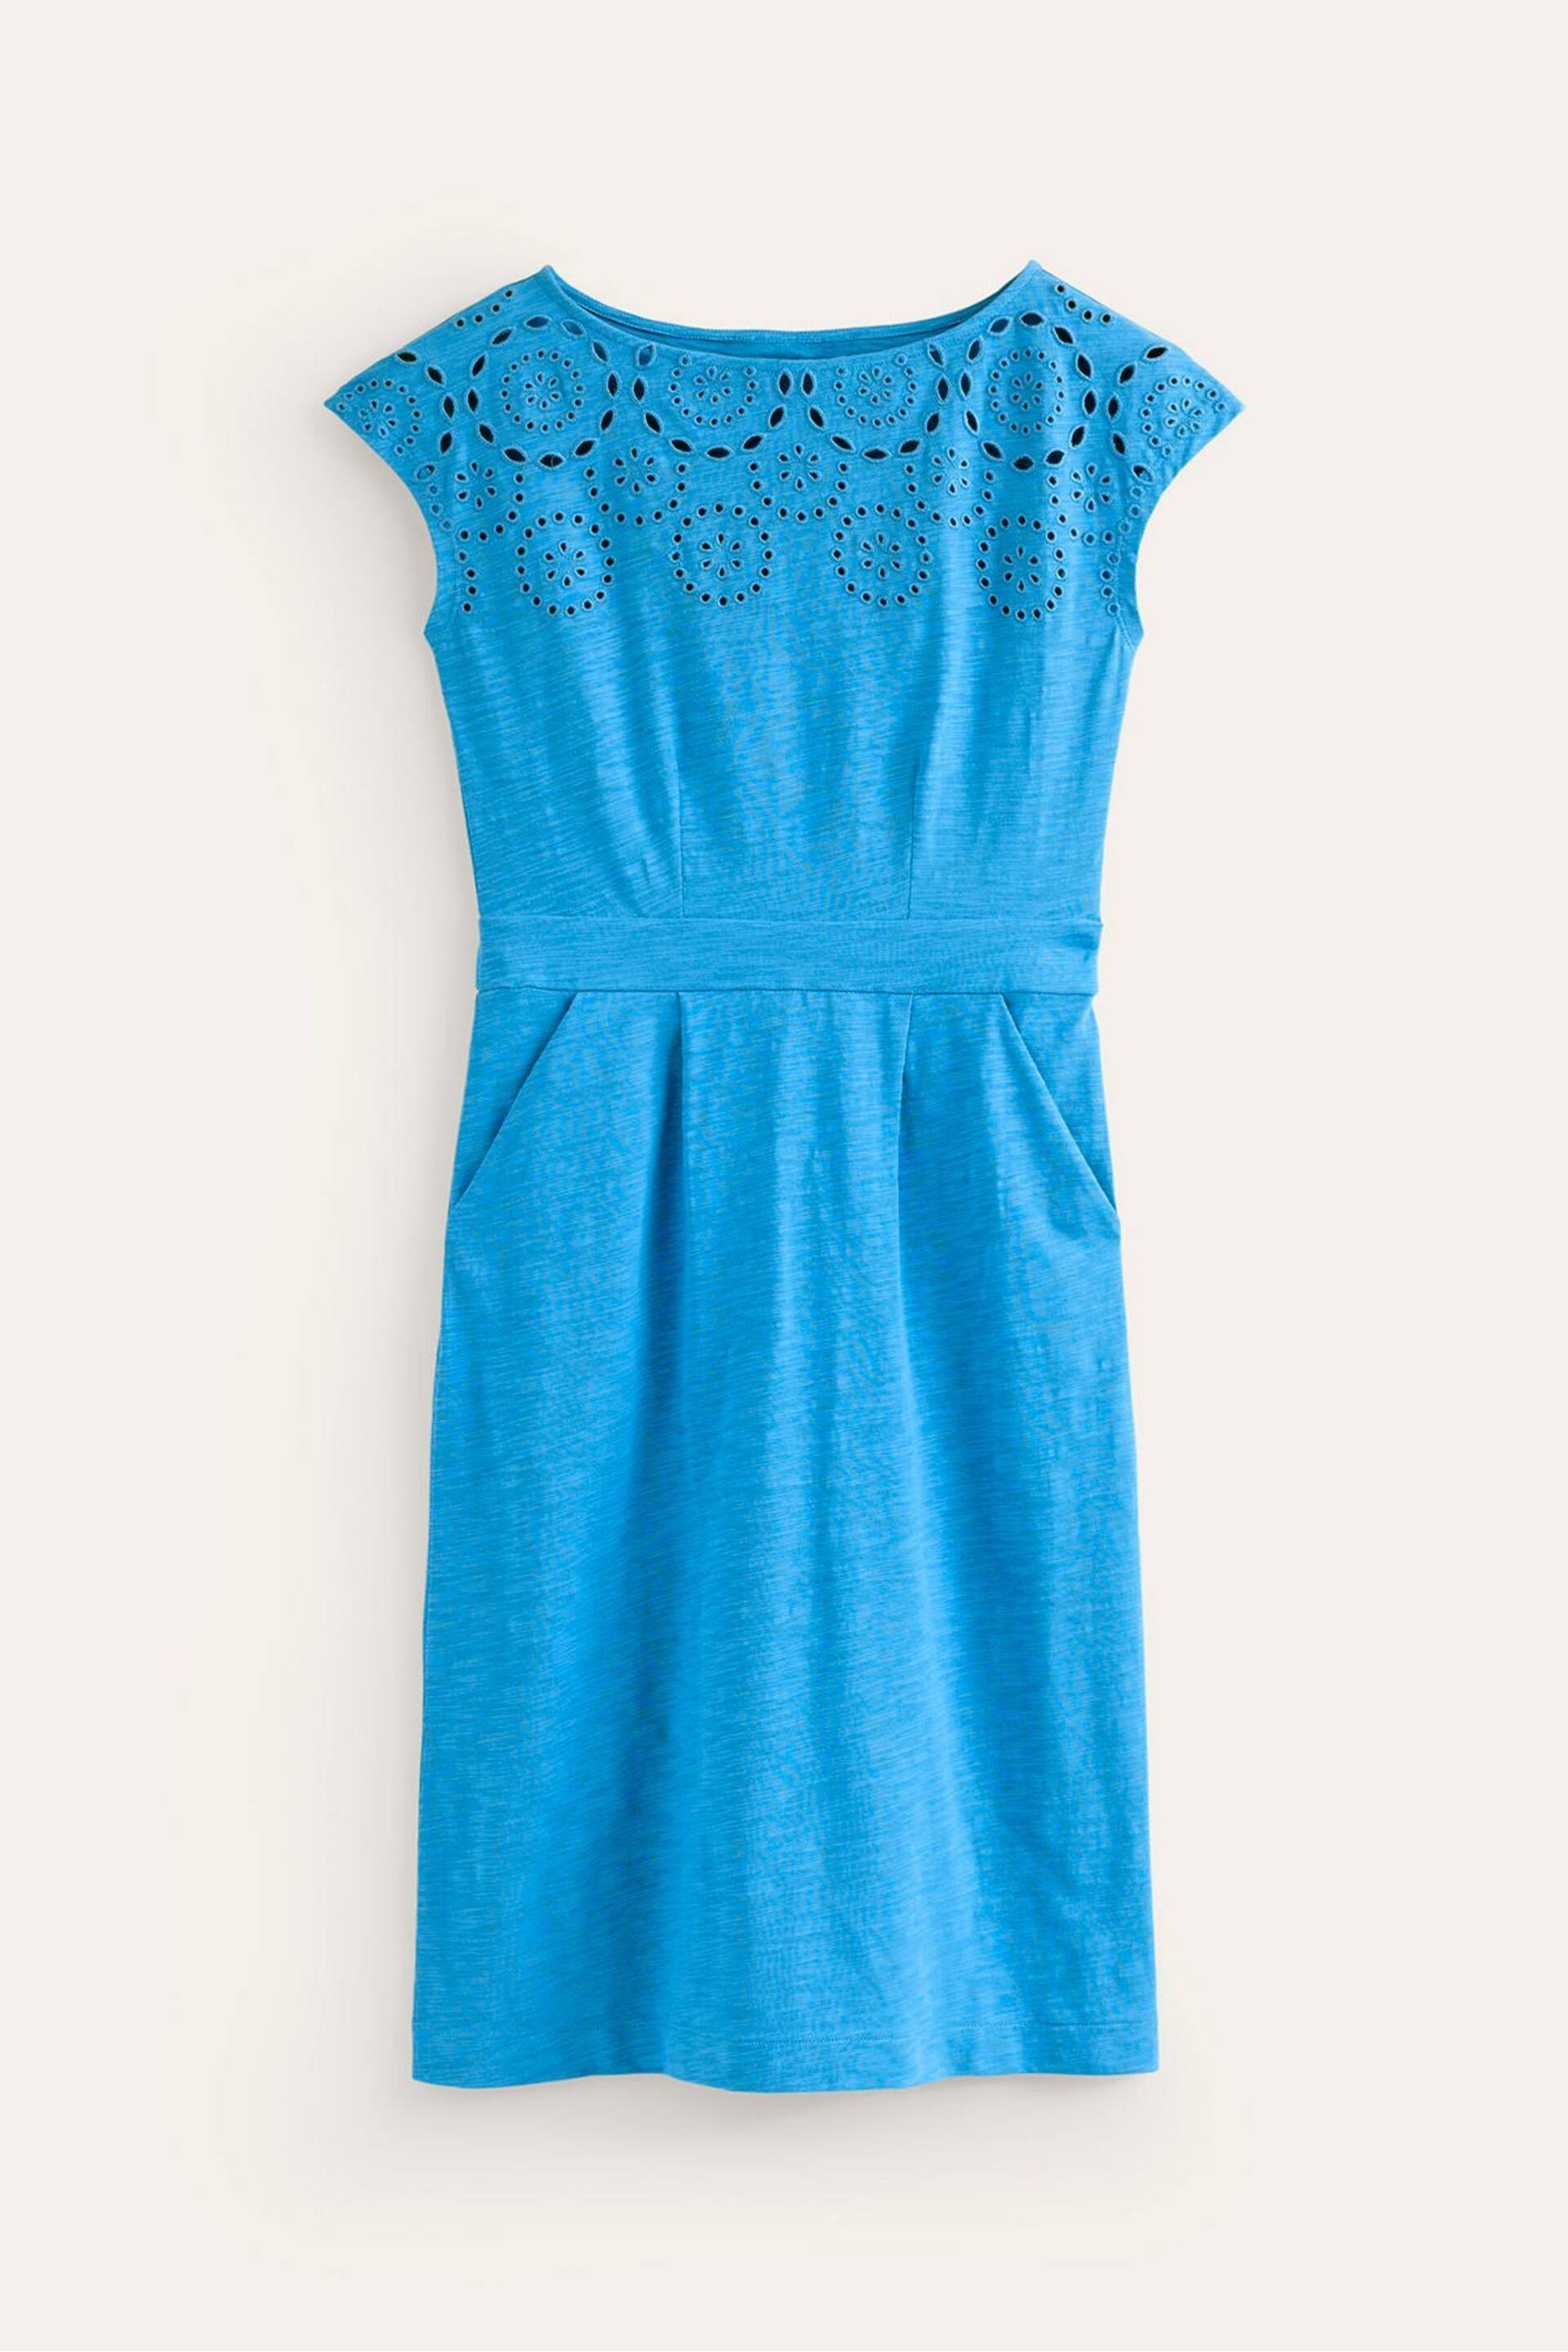 Boden Blue Florrie Broderie Jersey Dress - Image 3 of 4